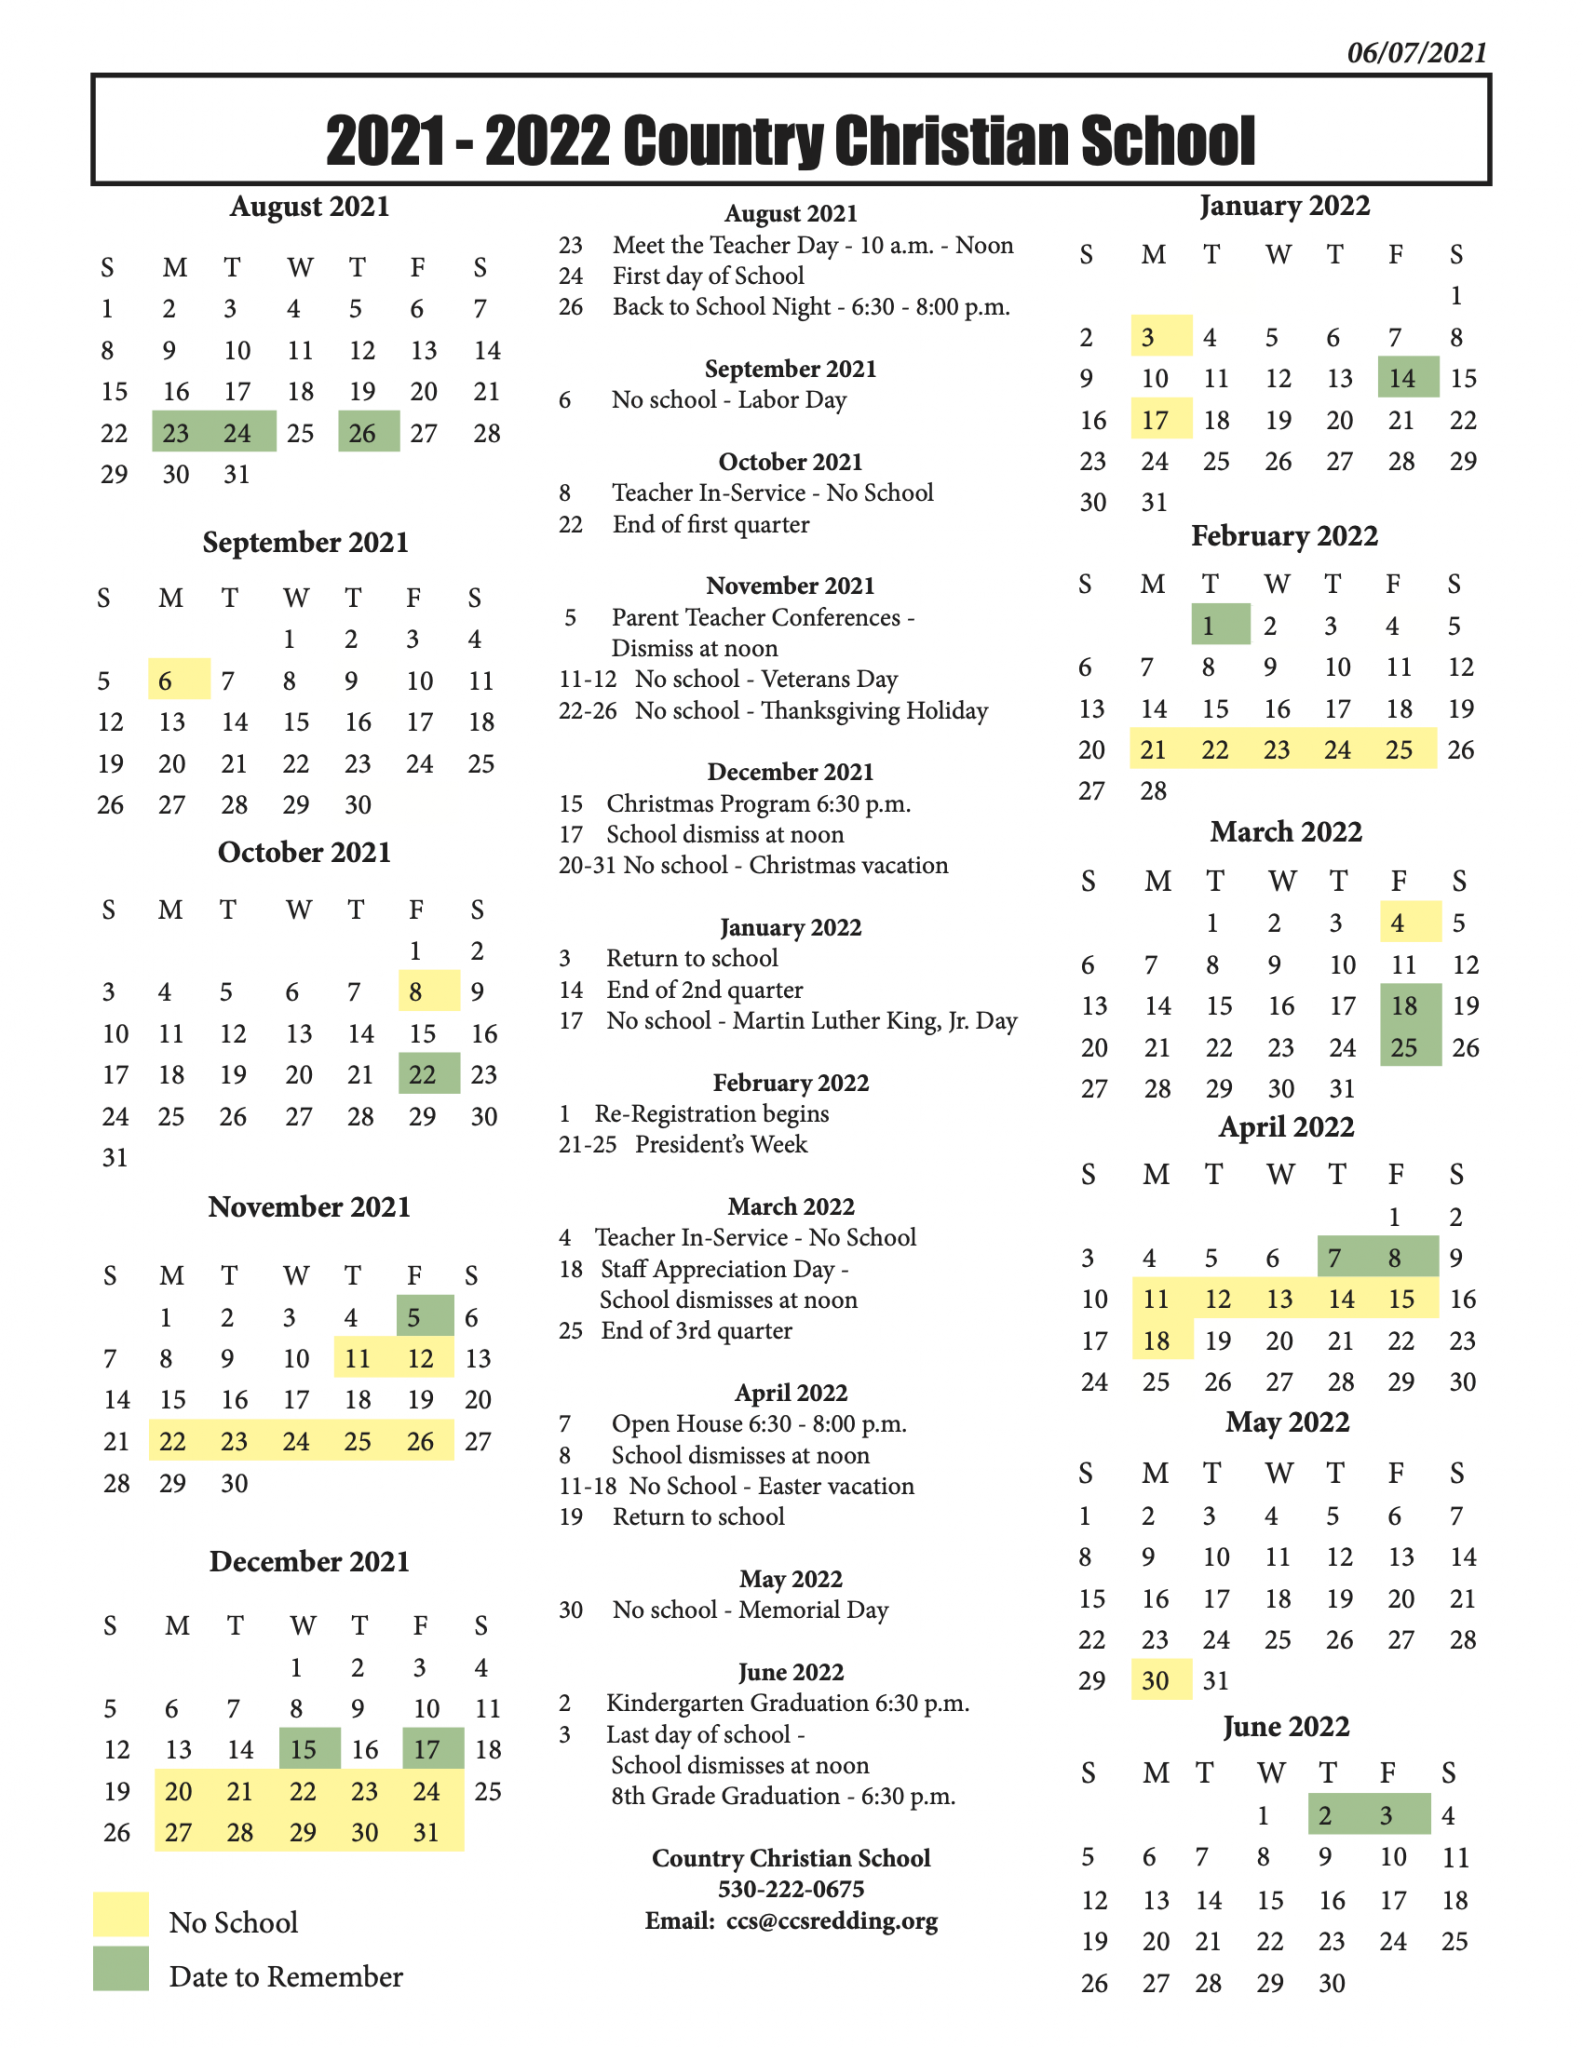 Annual Calendar – Country Christian School